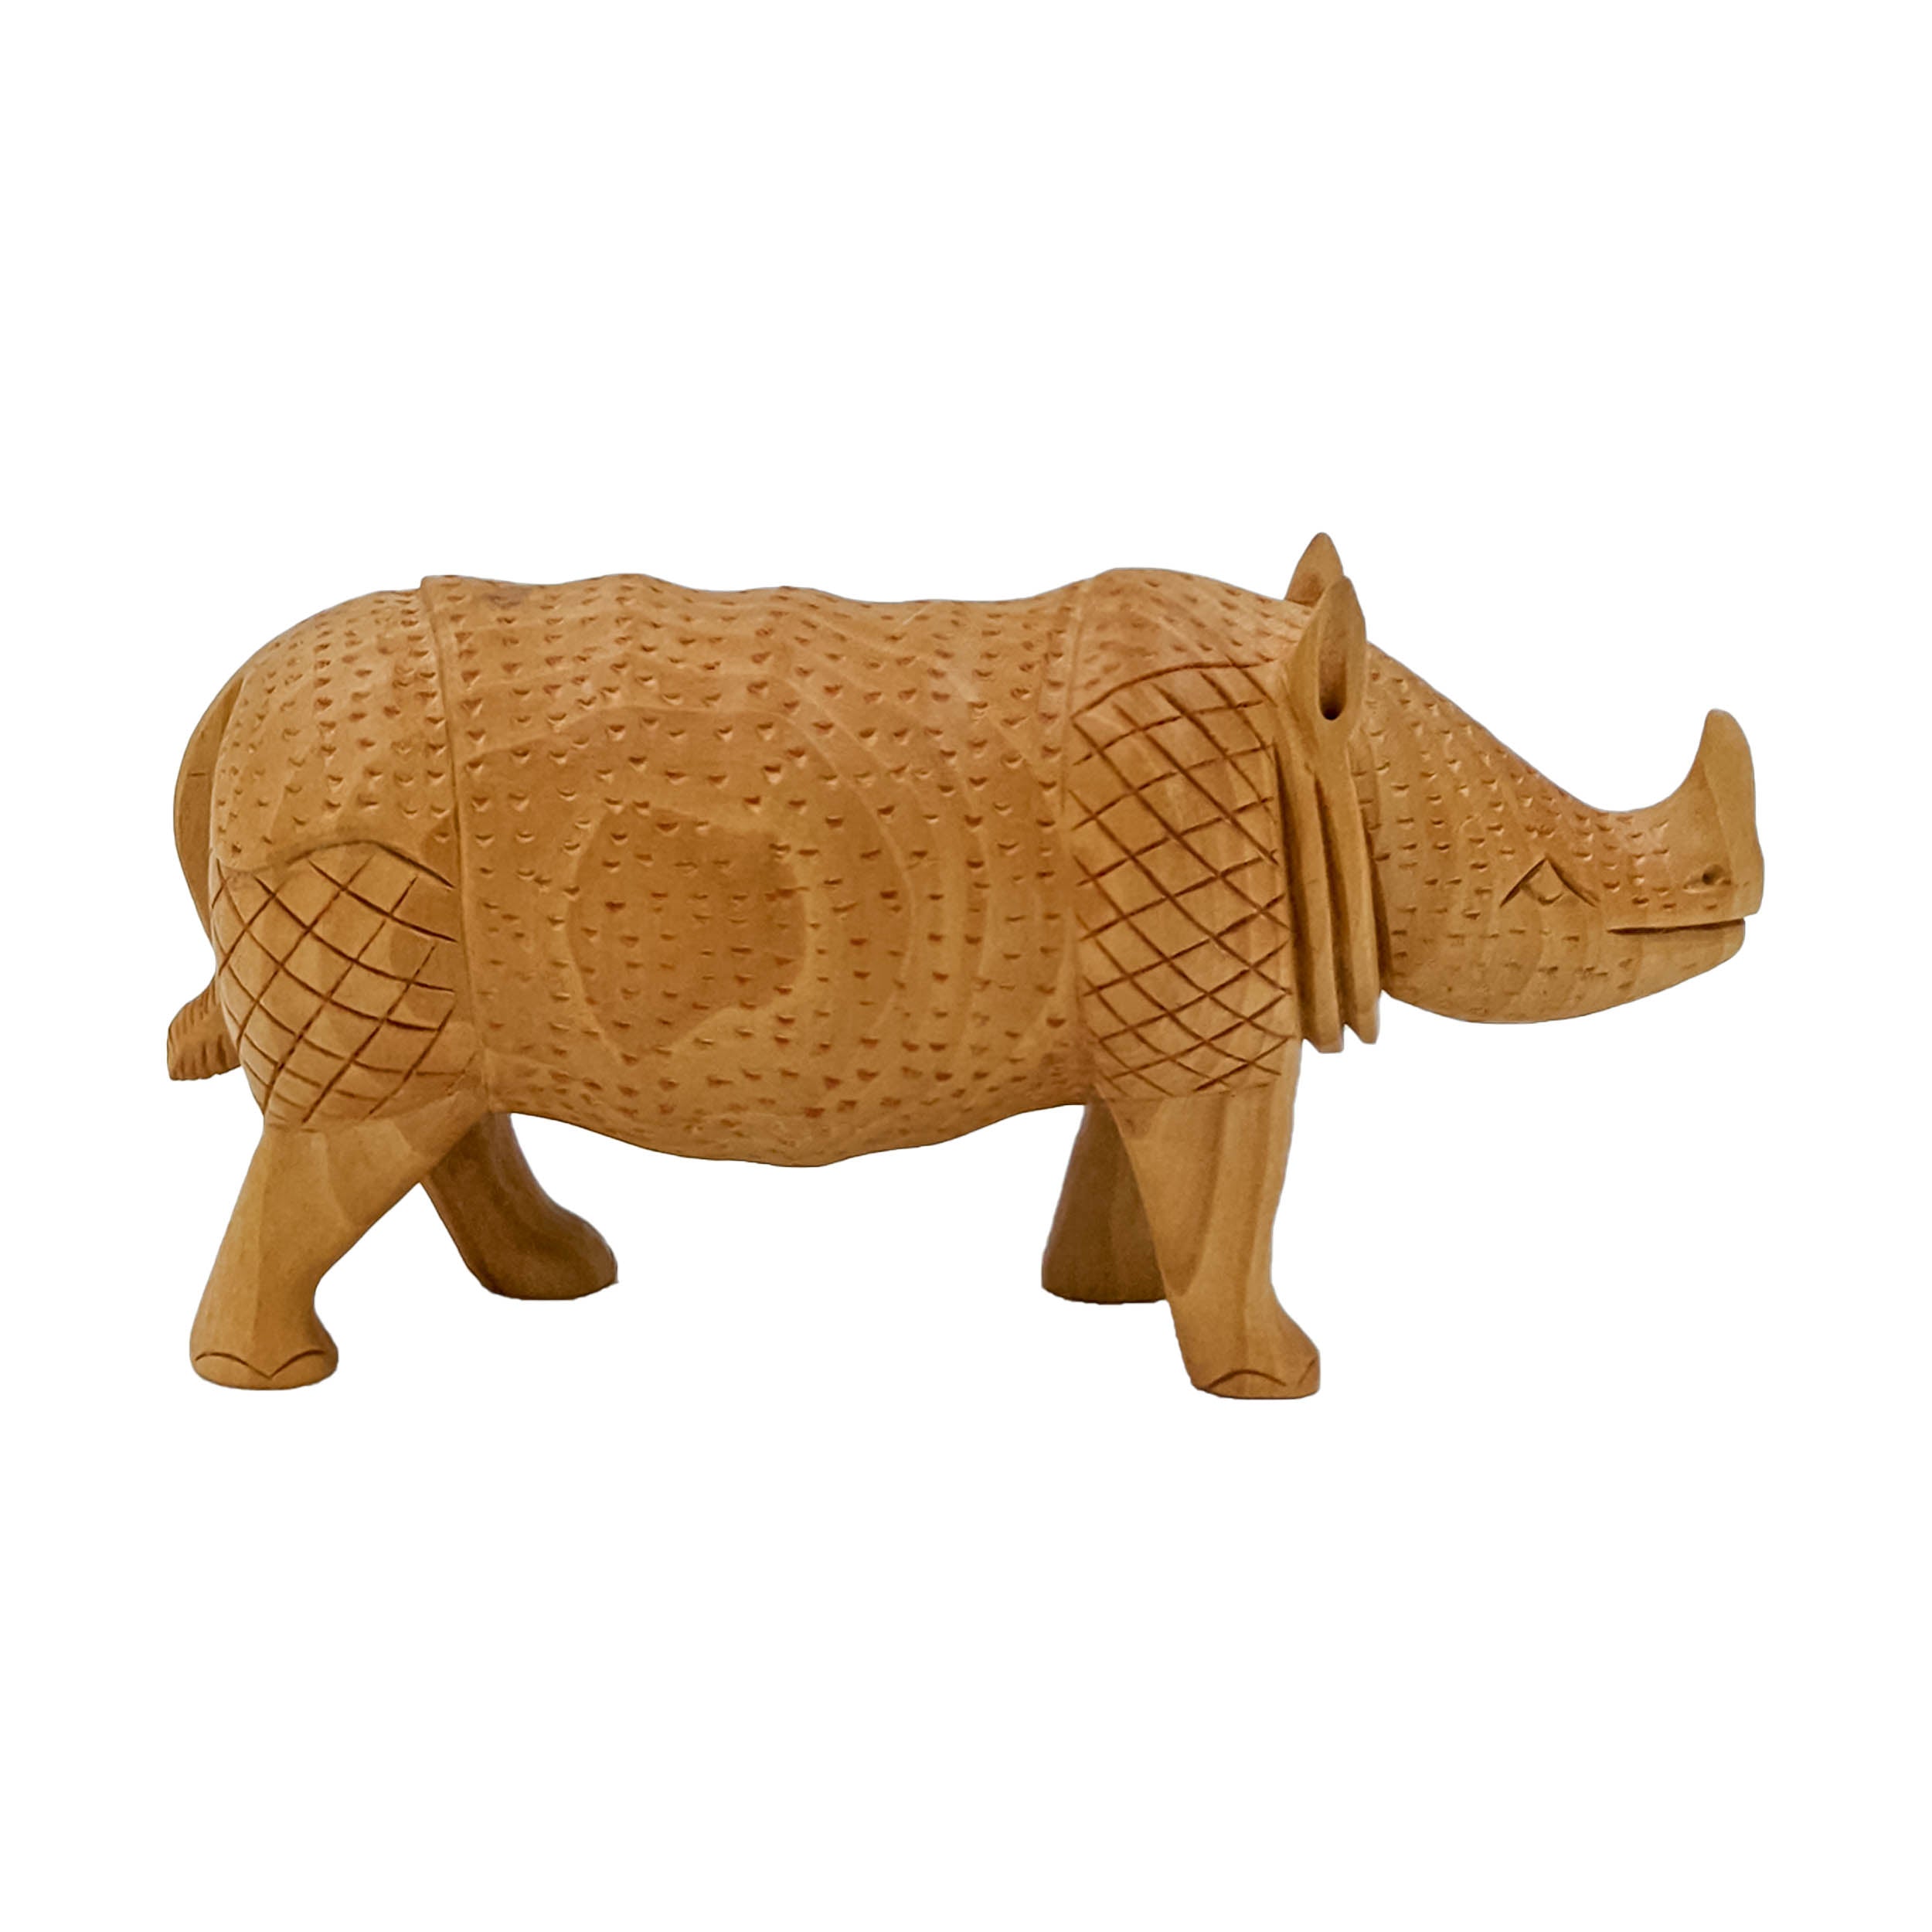 Handmade Wooden Rhinoceros Sculpture